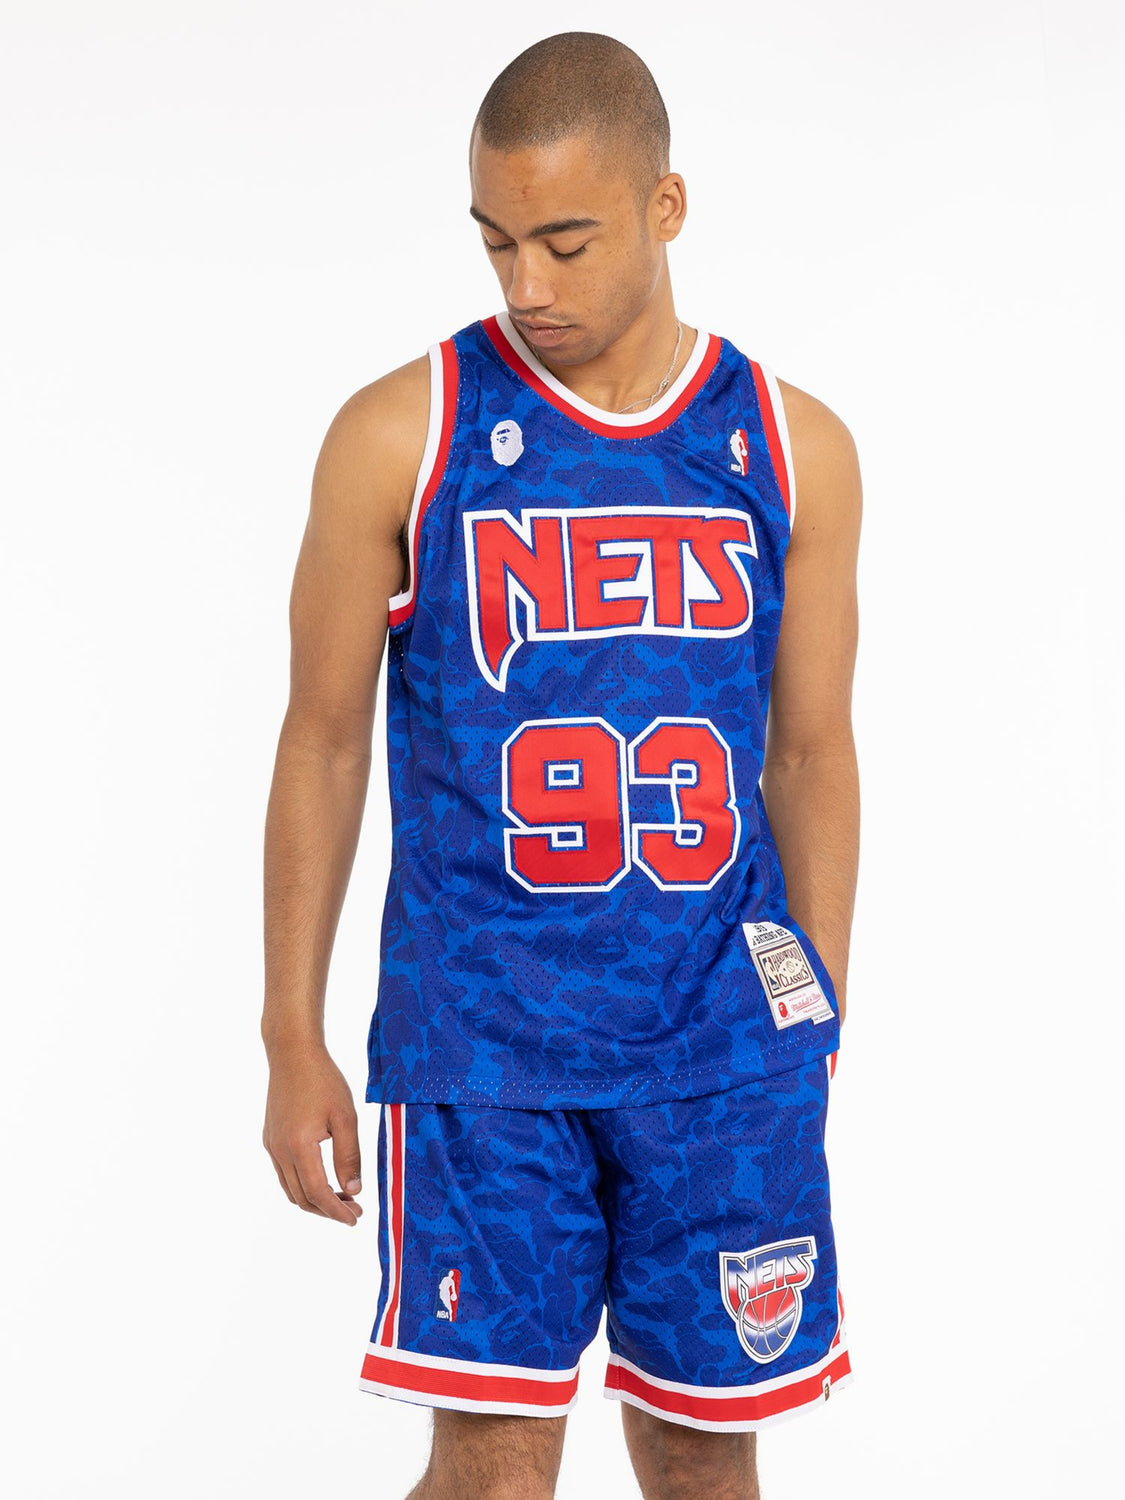 BAPE x Mitchell & Ness x NBA Uniforms